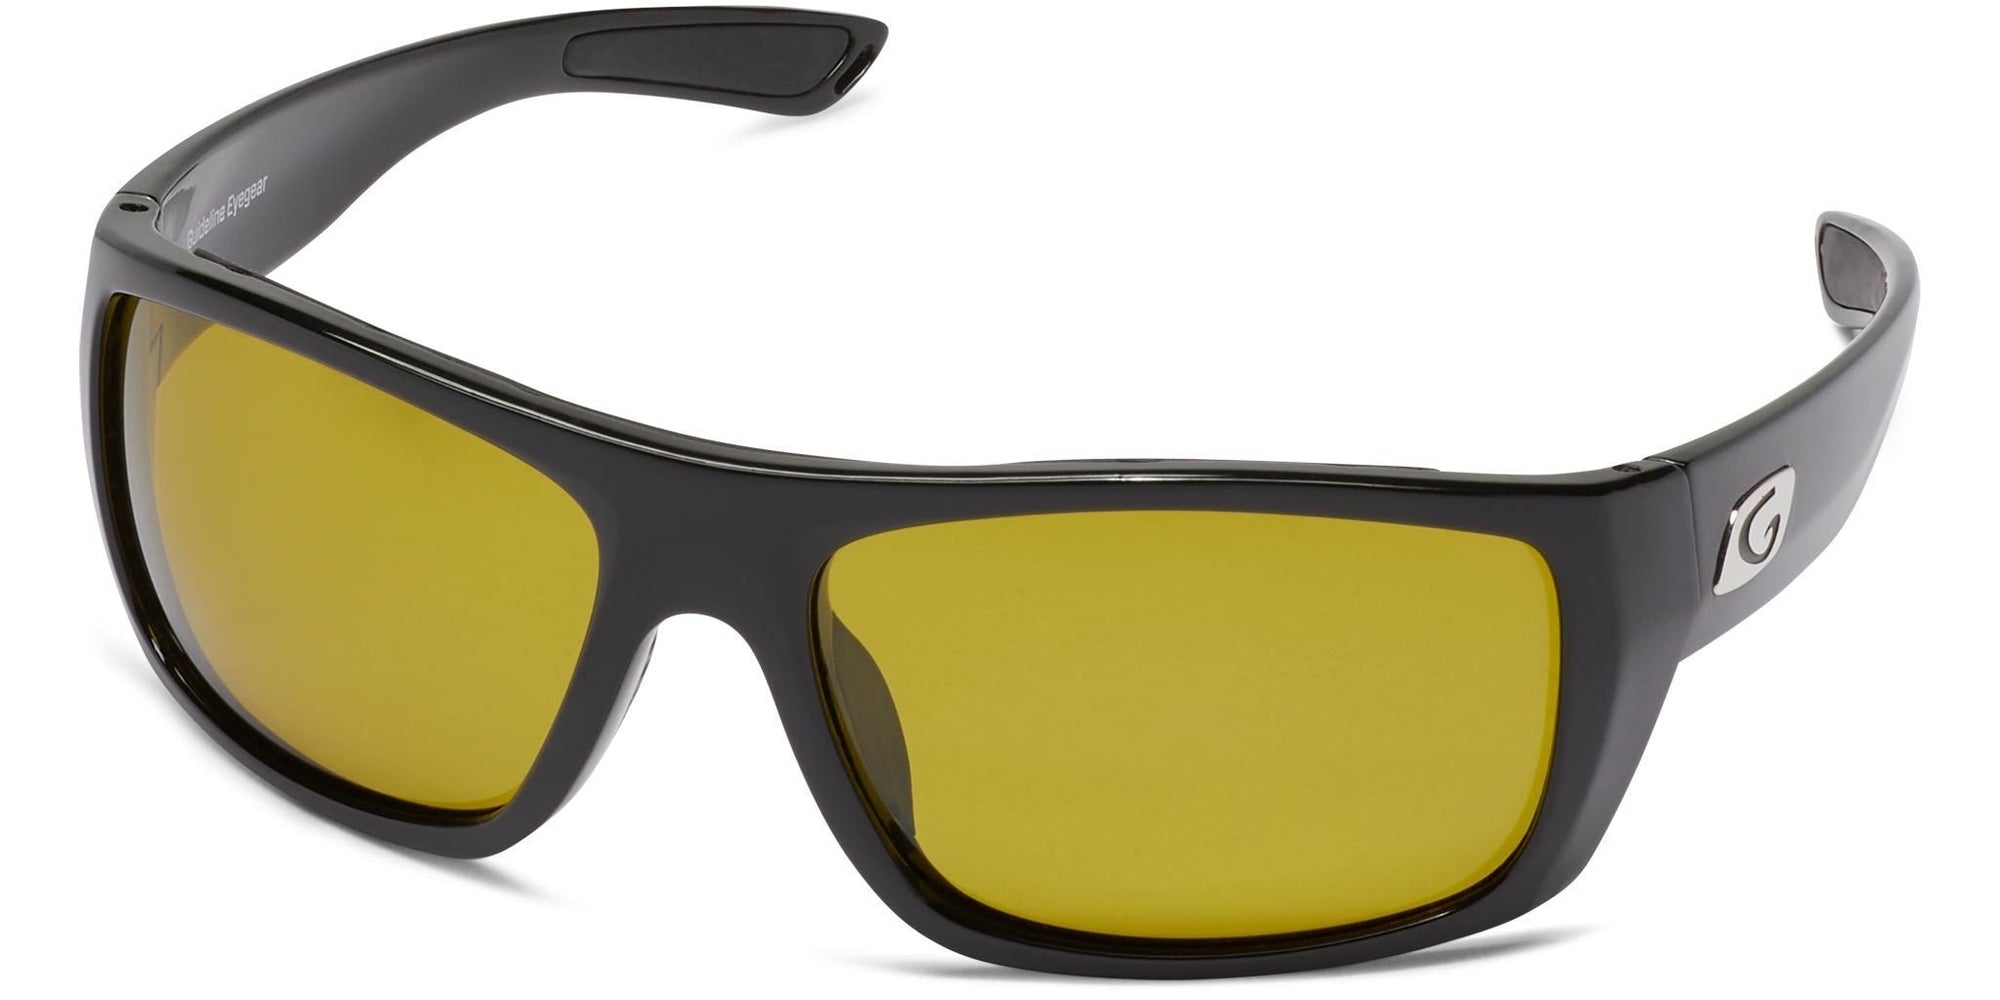 Coil - Shiny Black/Amber Lens - Polarized Sunglasses